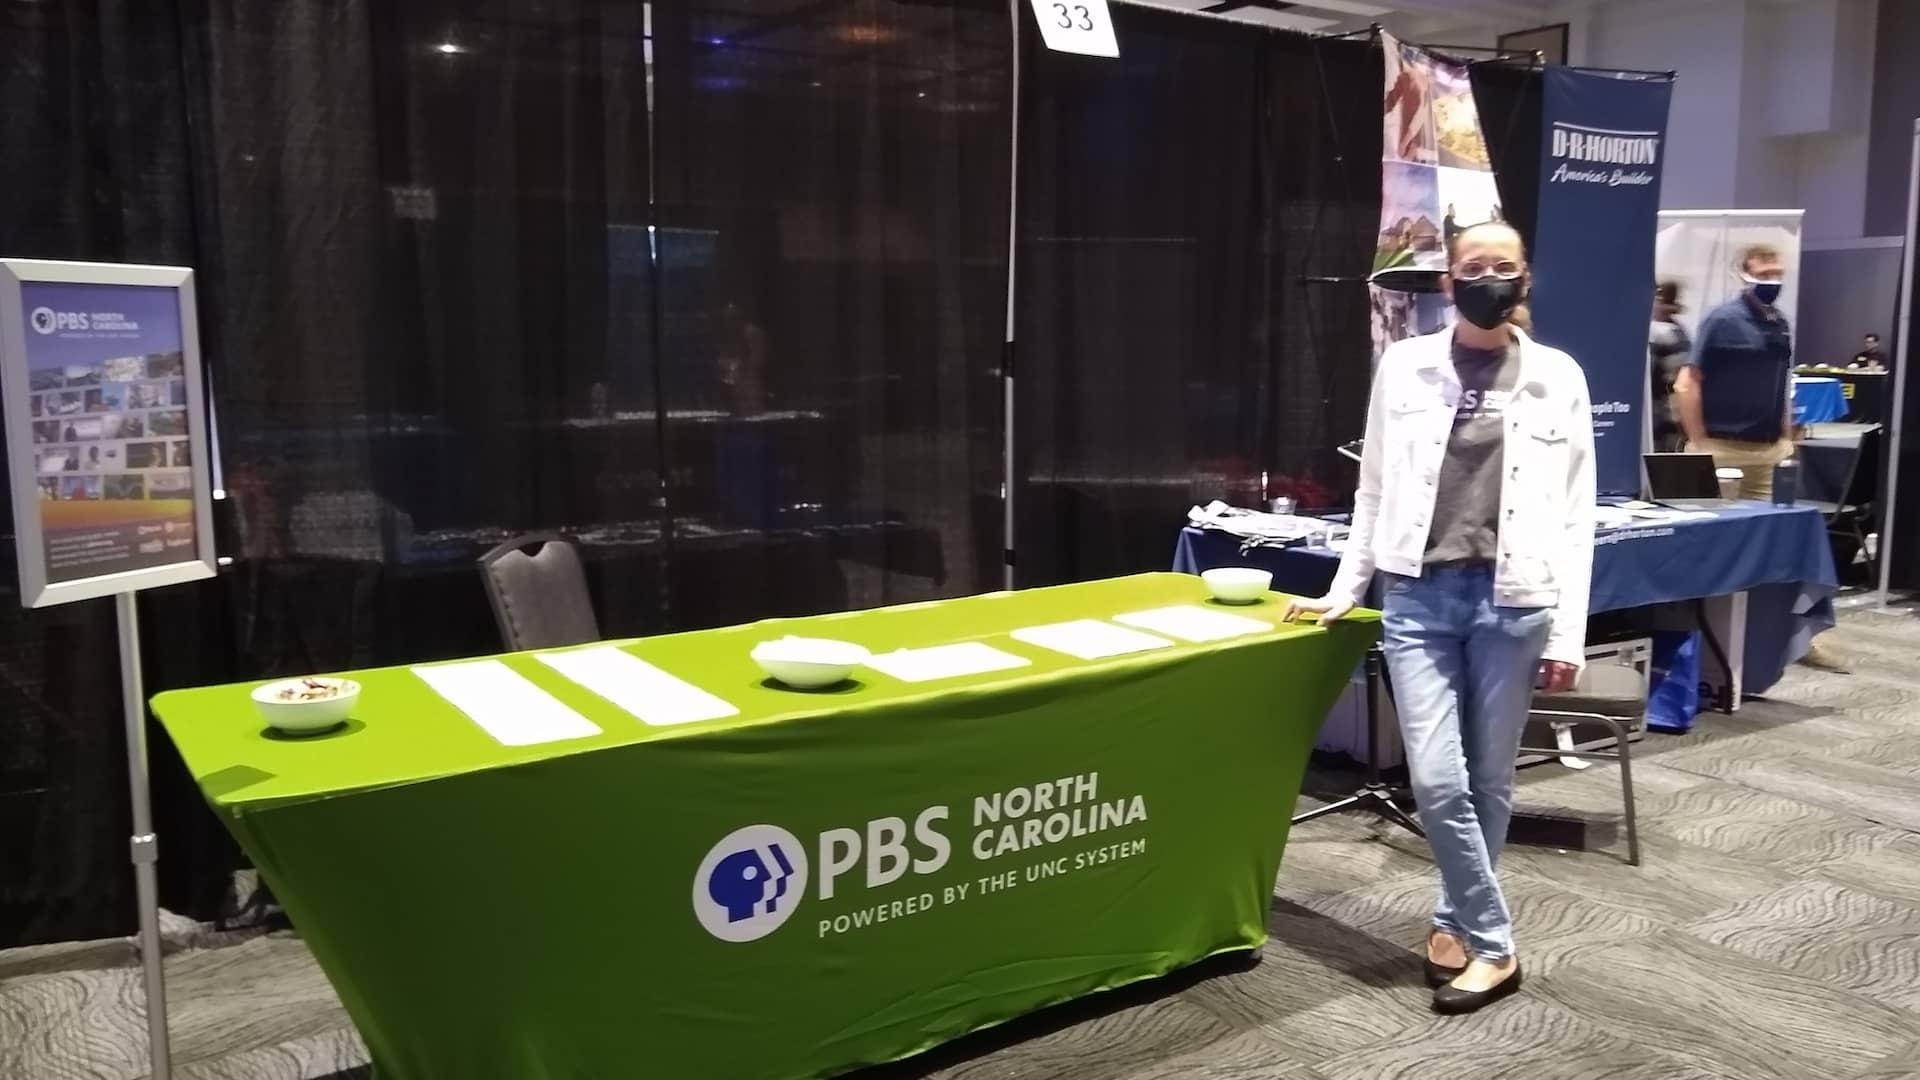 Judy Munson poses in front of the PBS North Carolina table at a career fair